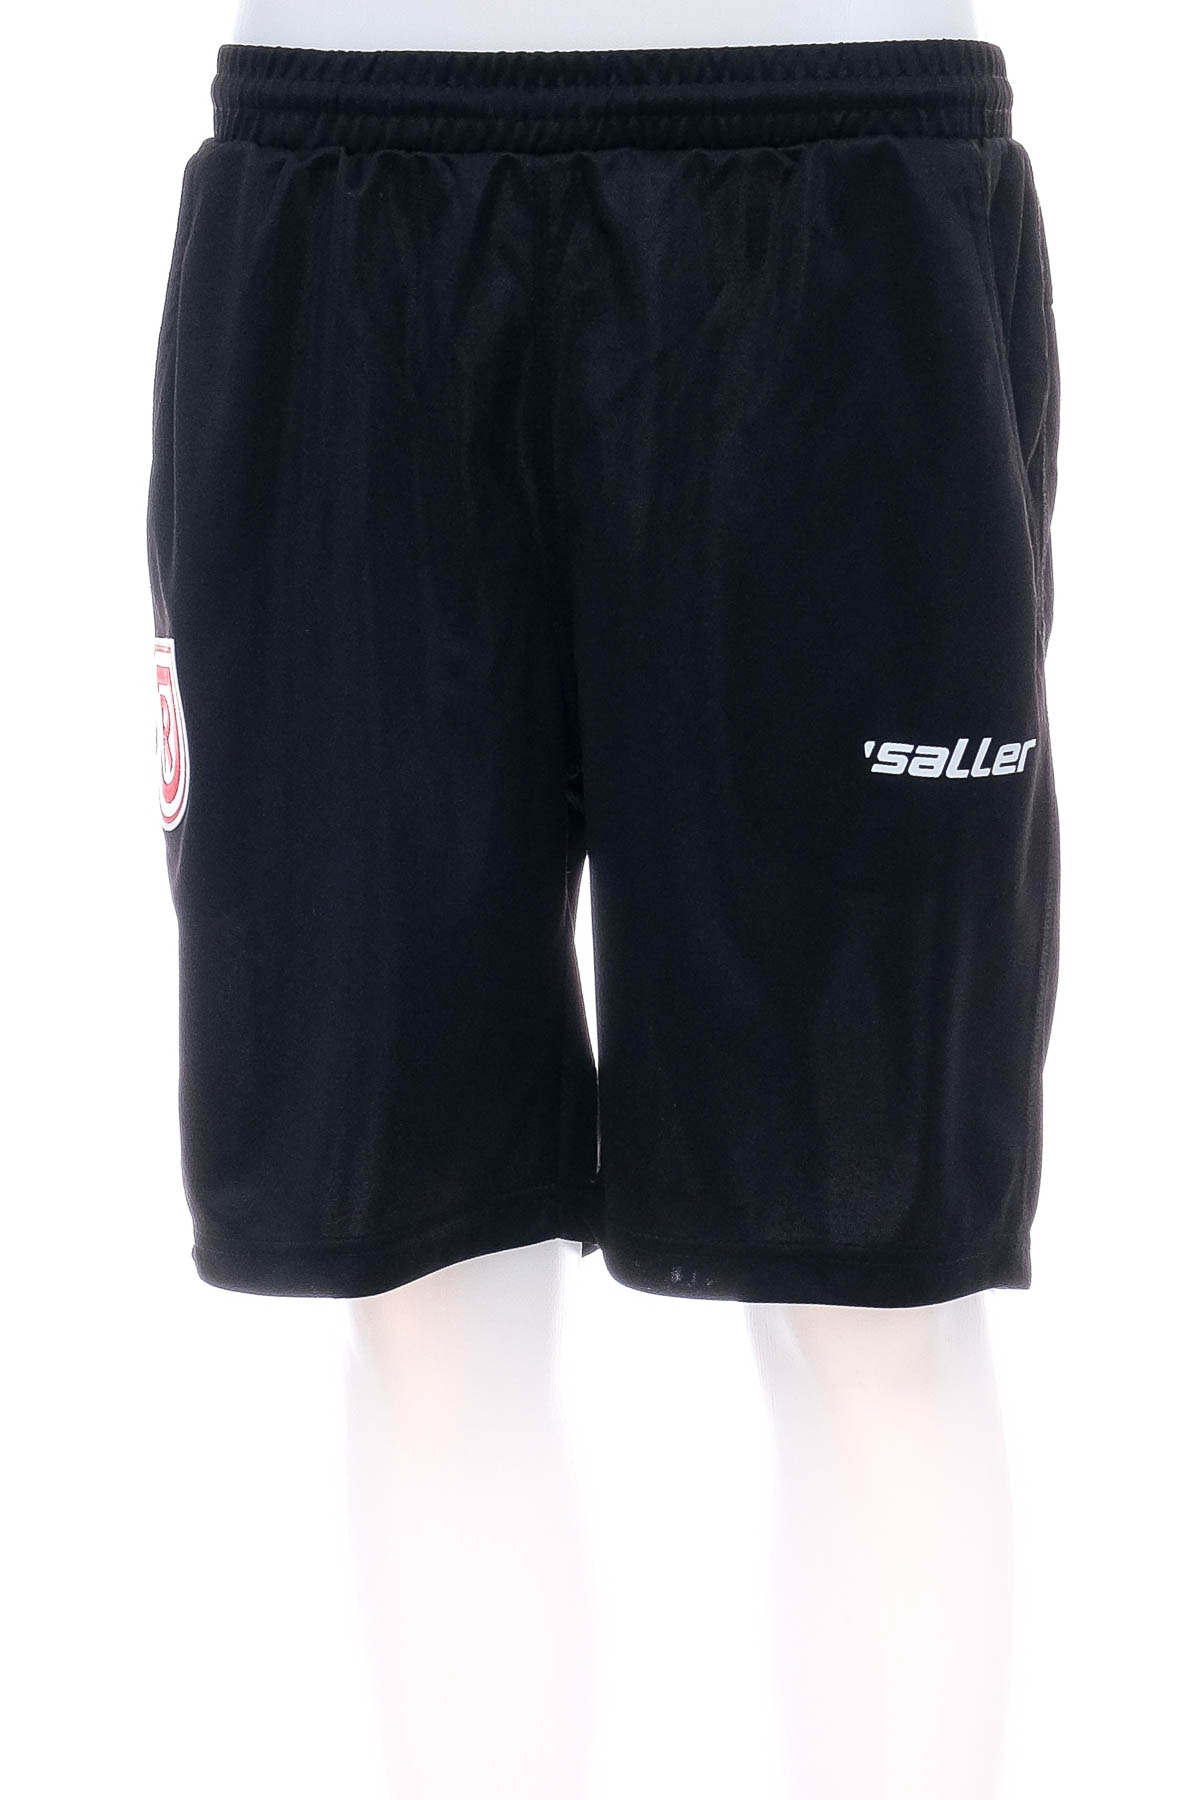 Men's shorts - Saller - 0